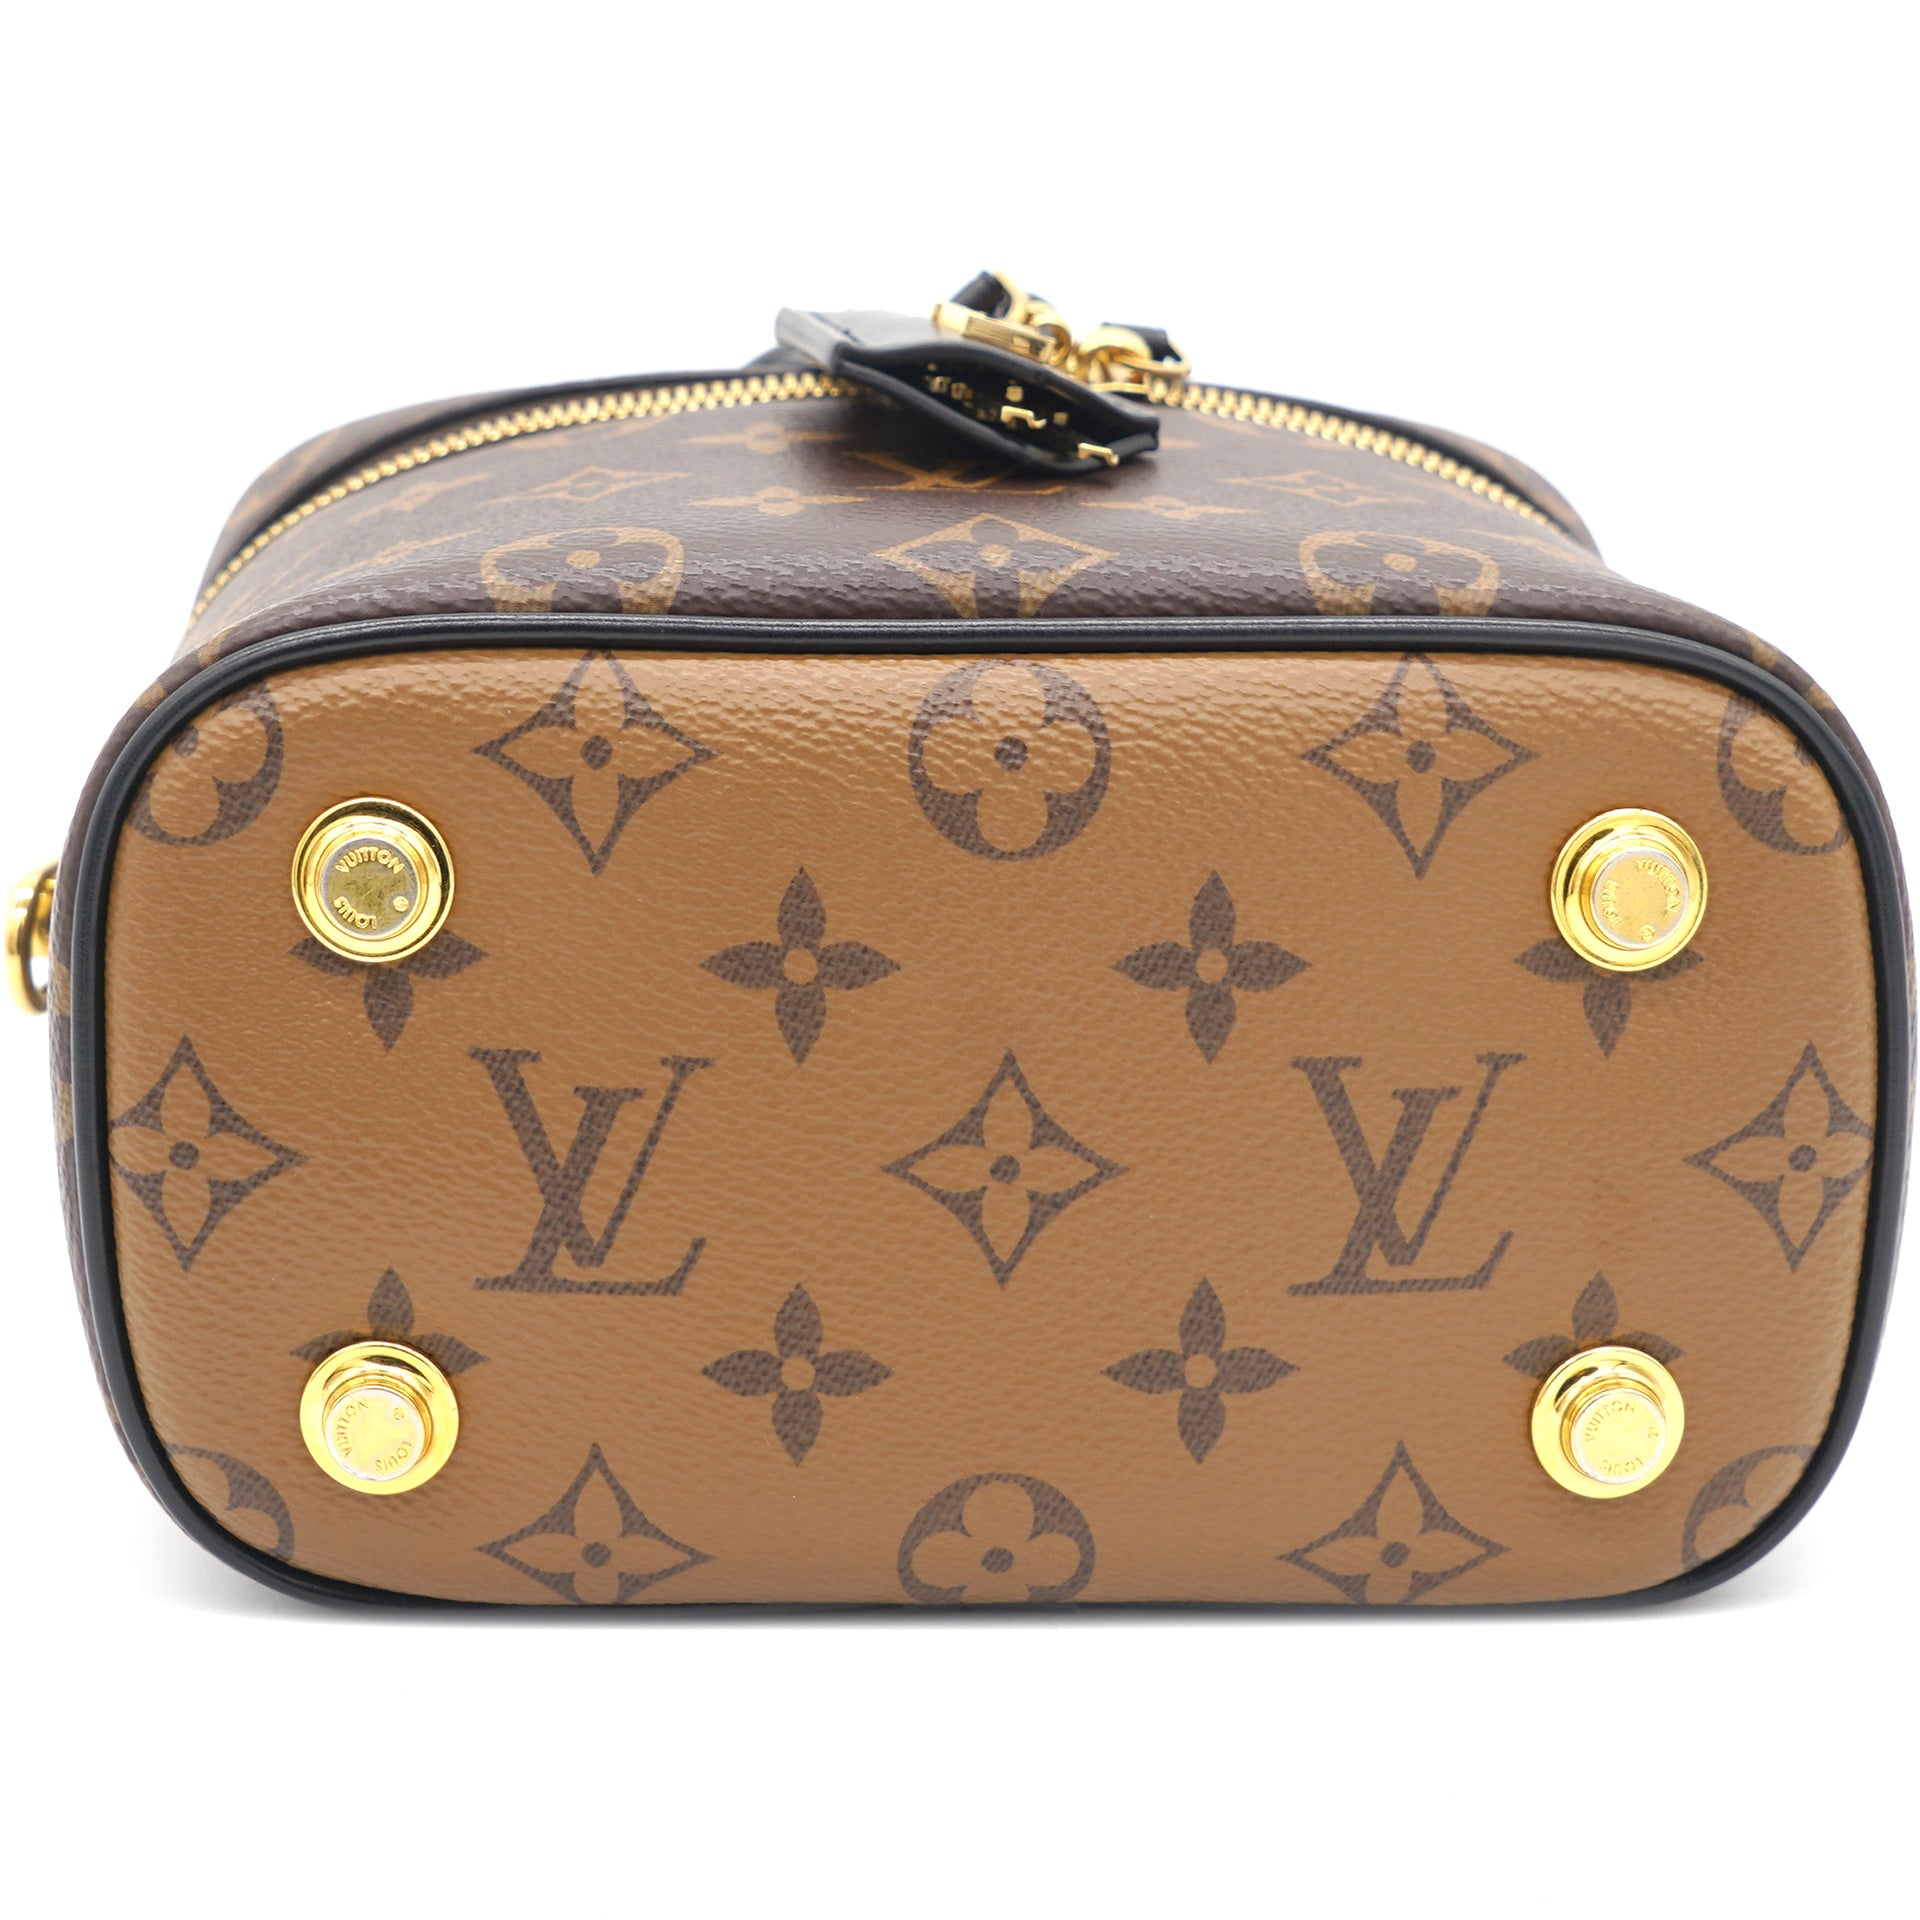 Louis Vuitton Nice Mini VANITY travel Bag New